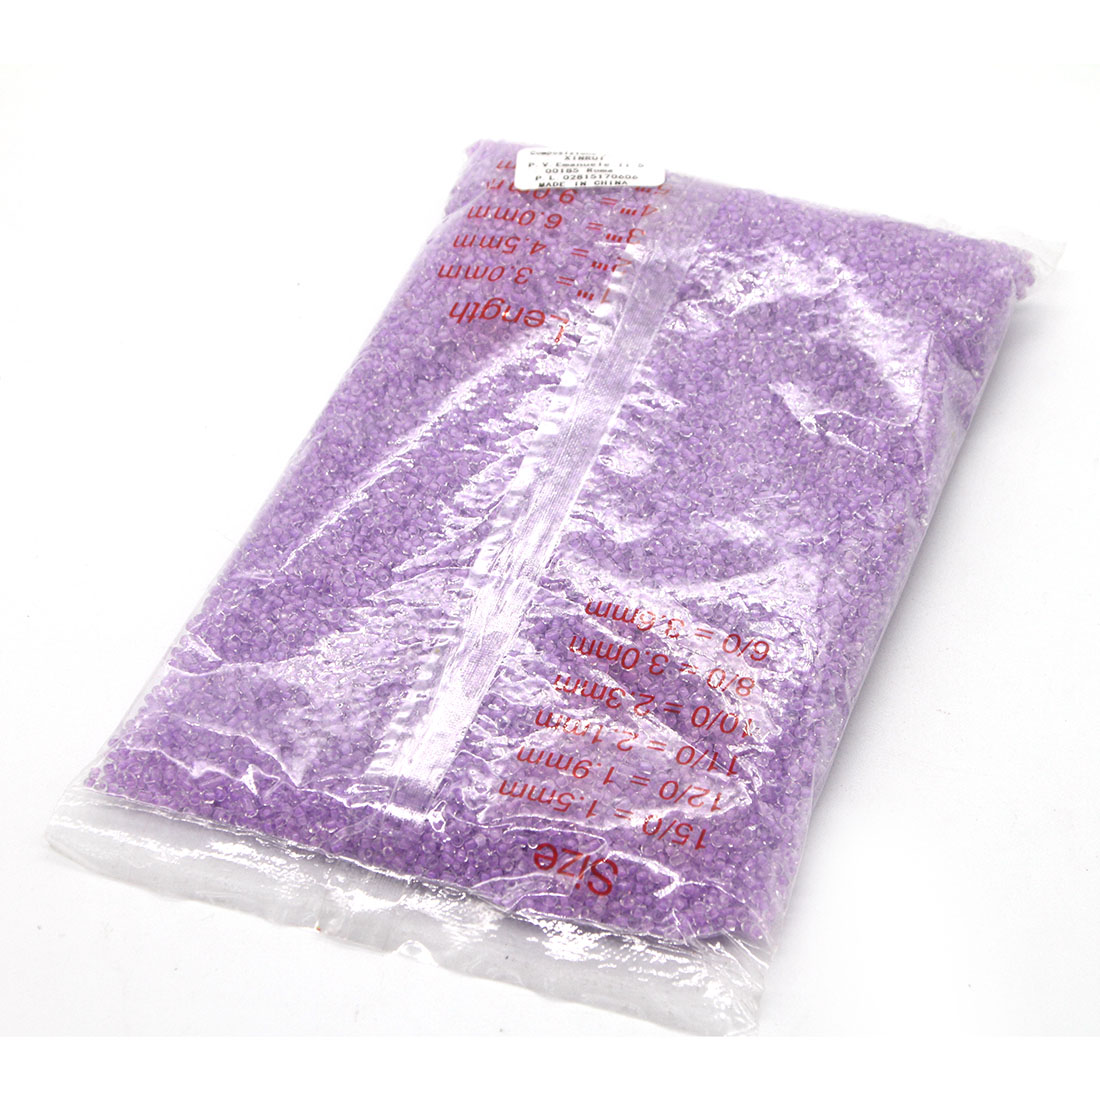 Light purple 2mm 30,000 packs